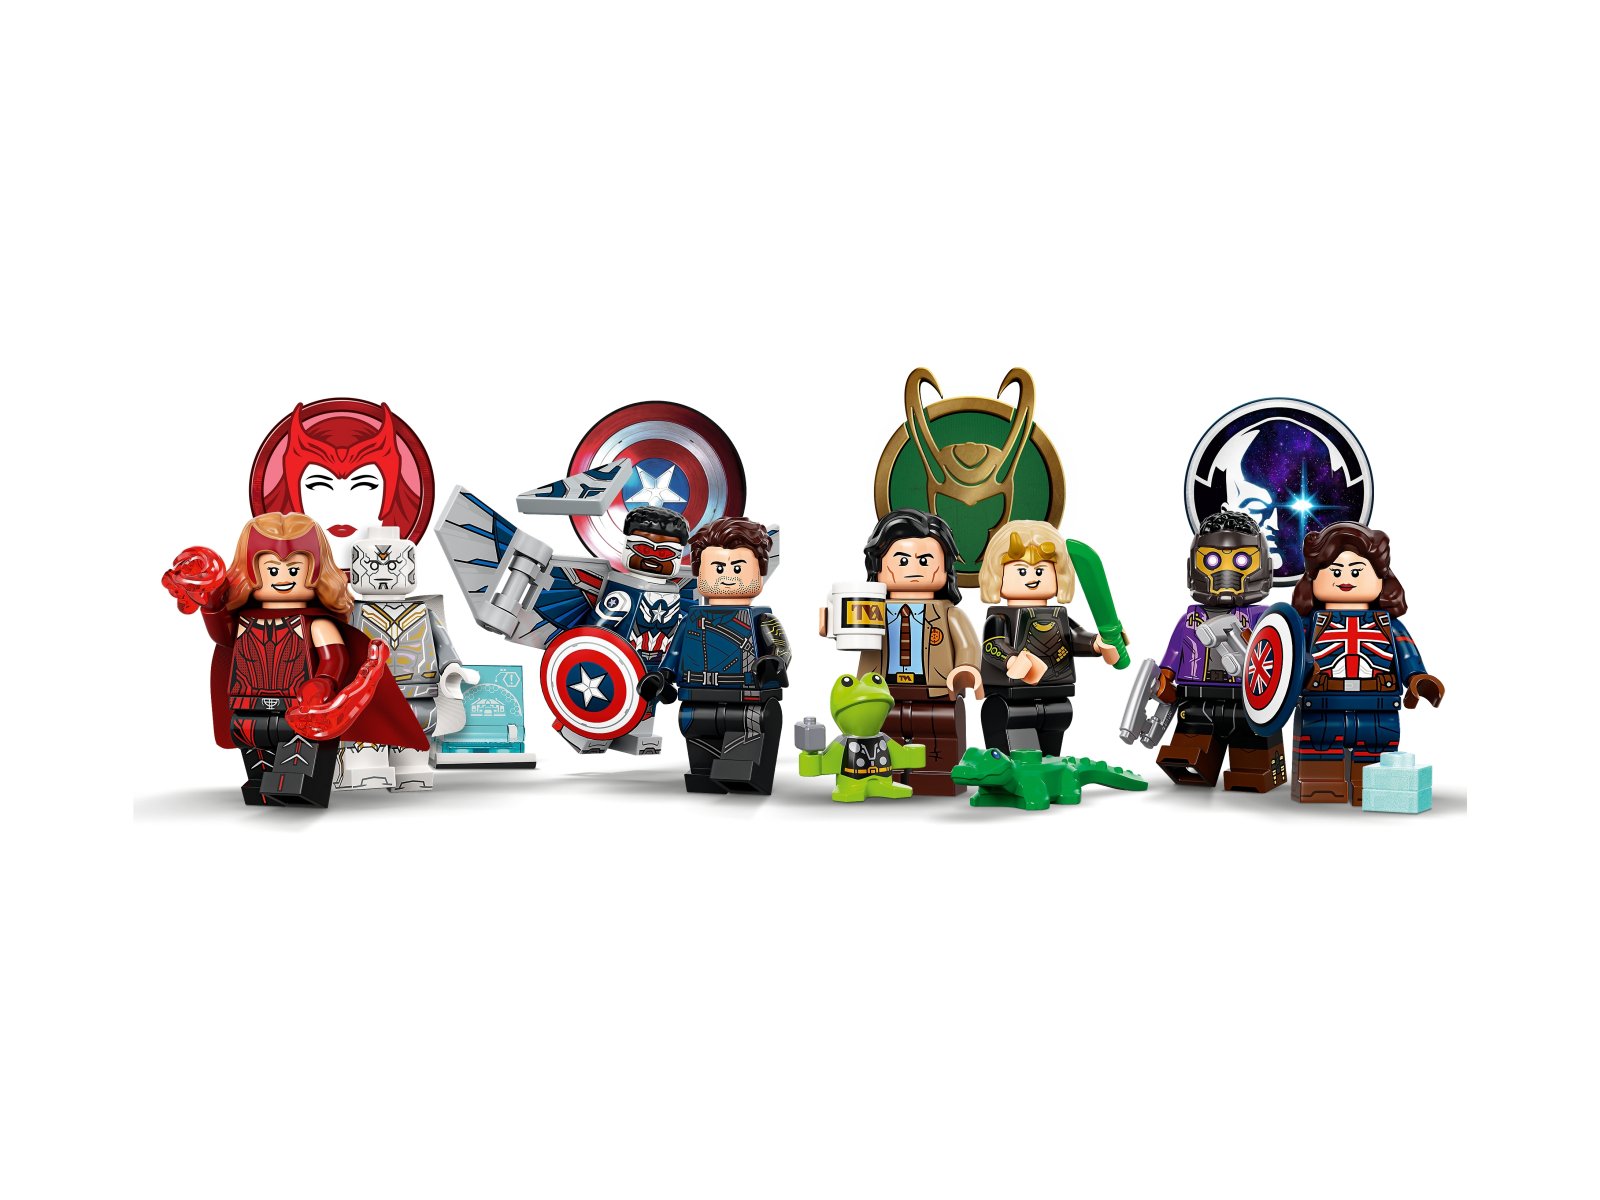 LEGO Minifigures 71031 Marvel Studios